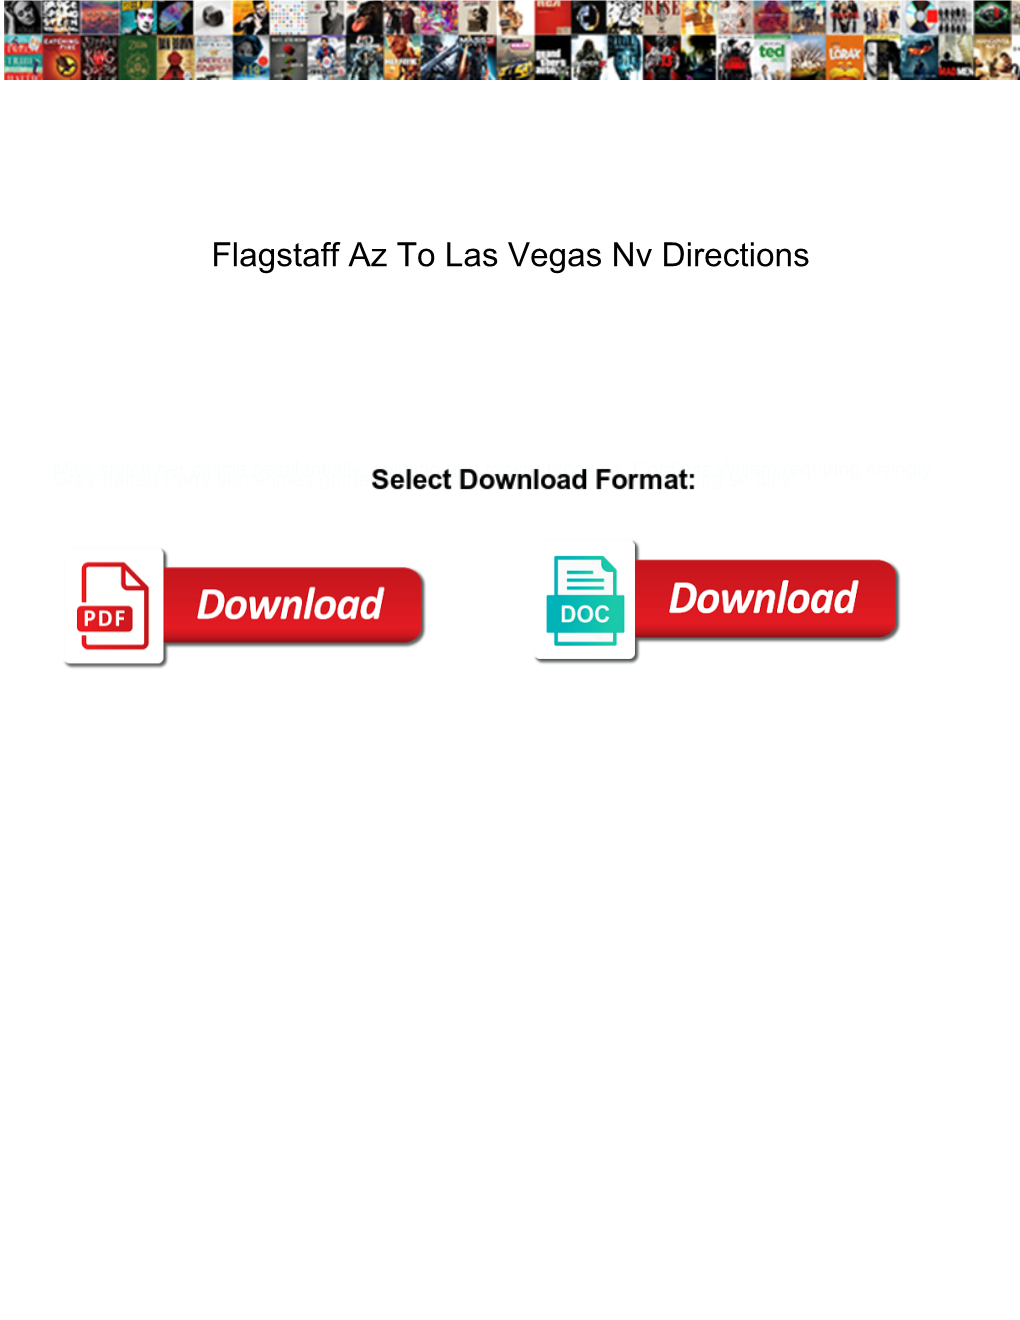 Flagstaff Az to Las Vegas Nv Directions